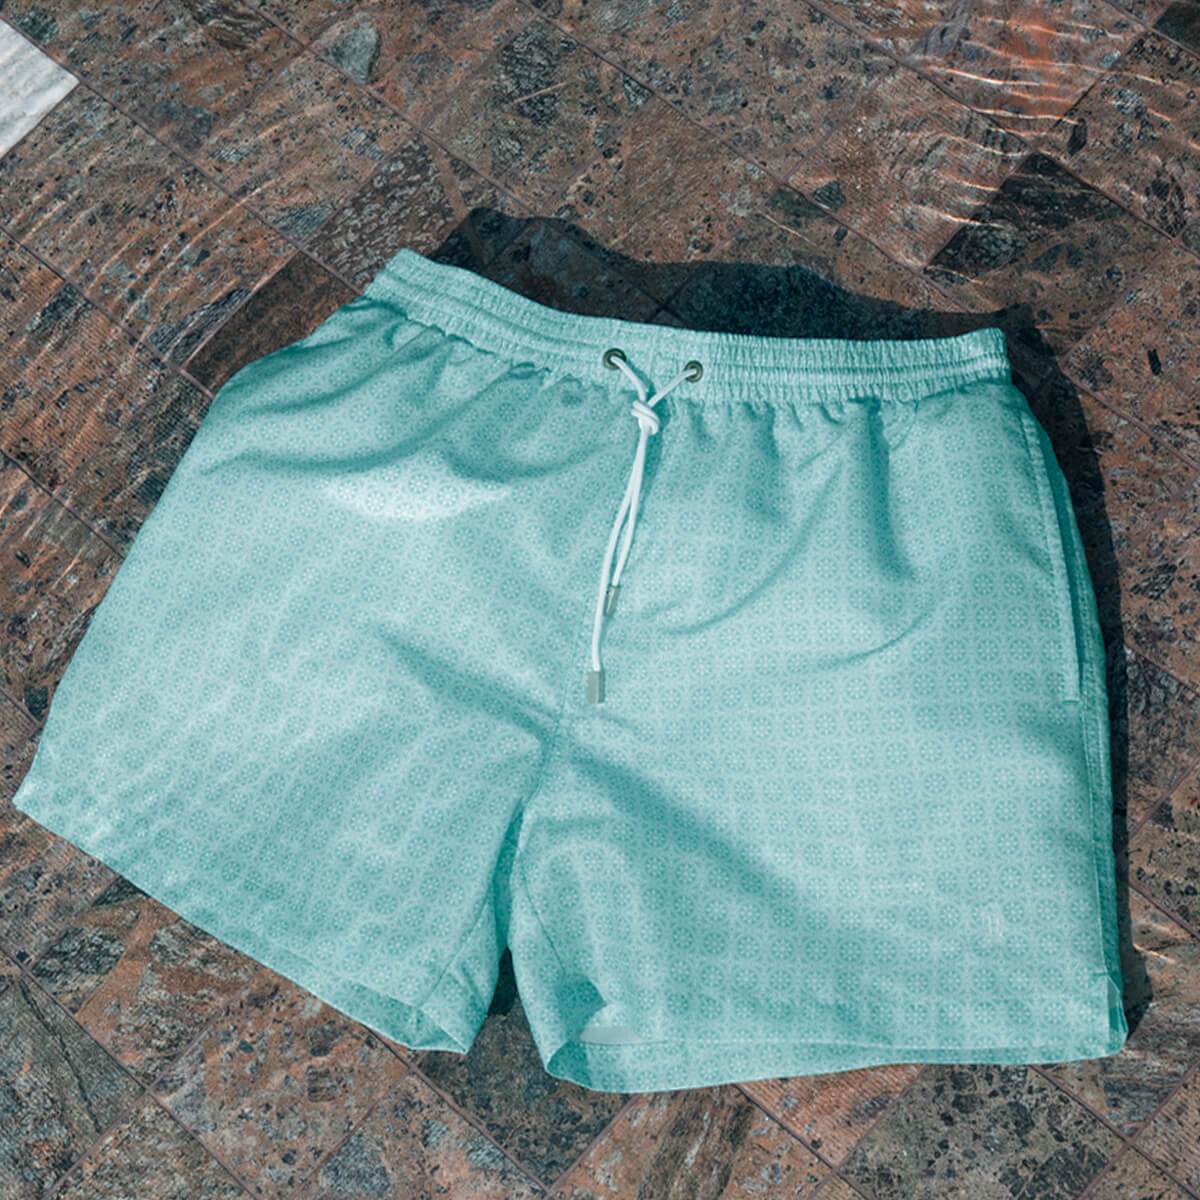 Gagliardi Swimwear Turquoise Maltese Tile Print Swim Shorts